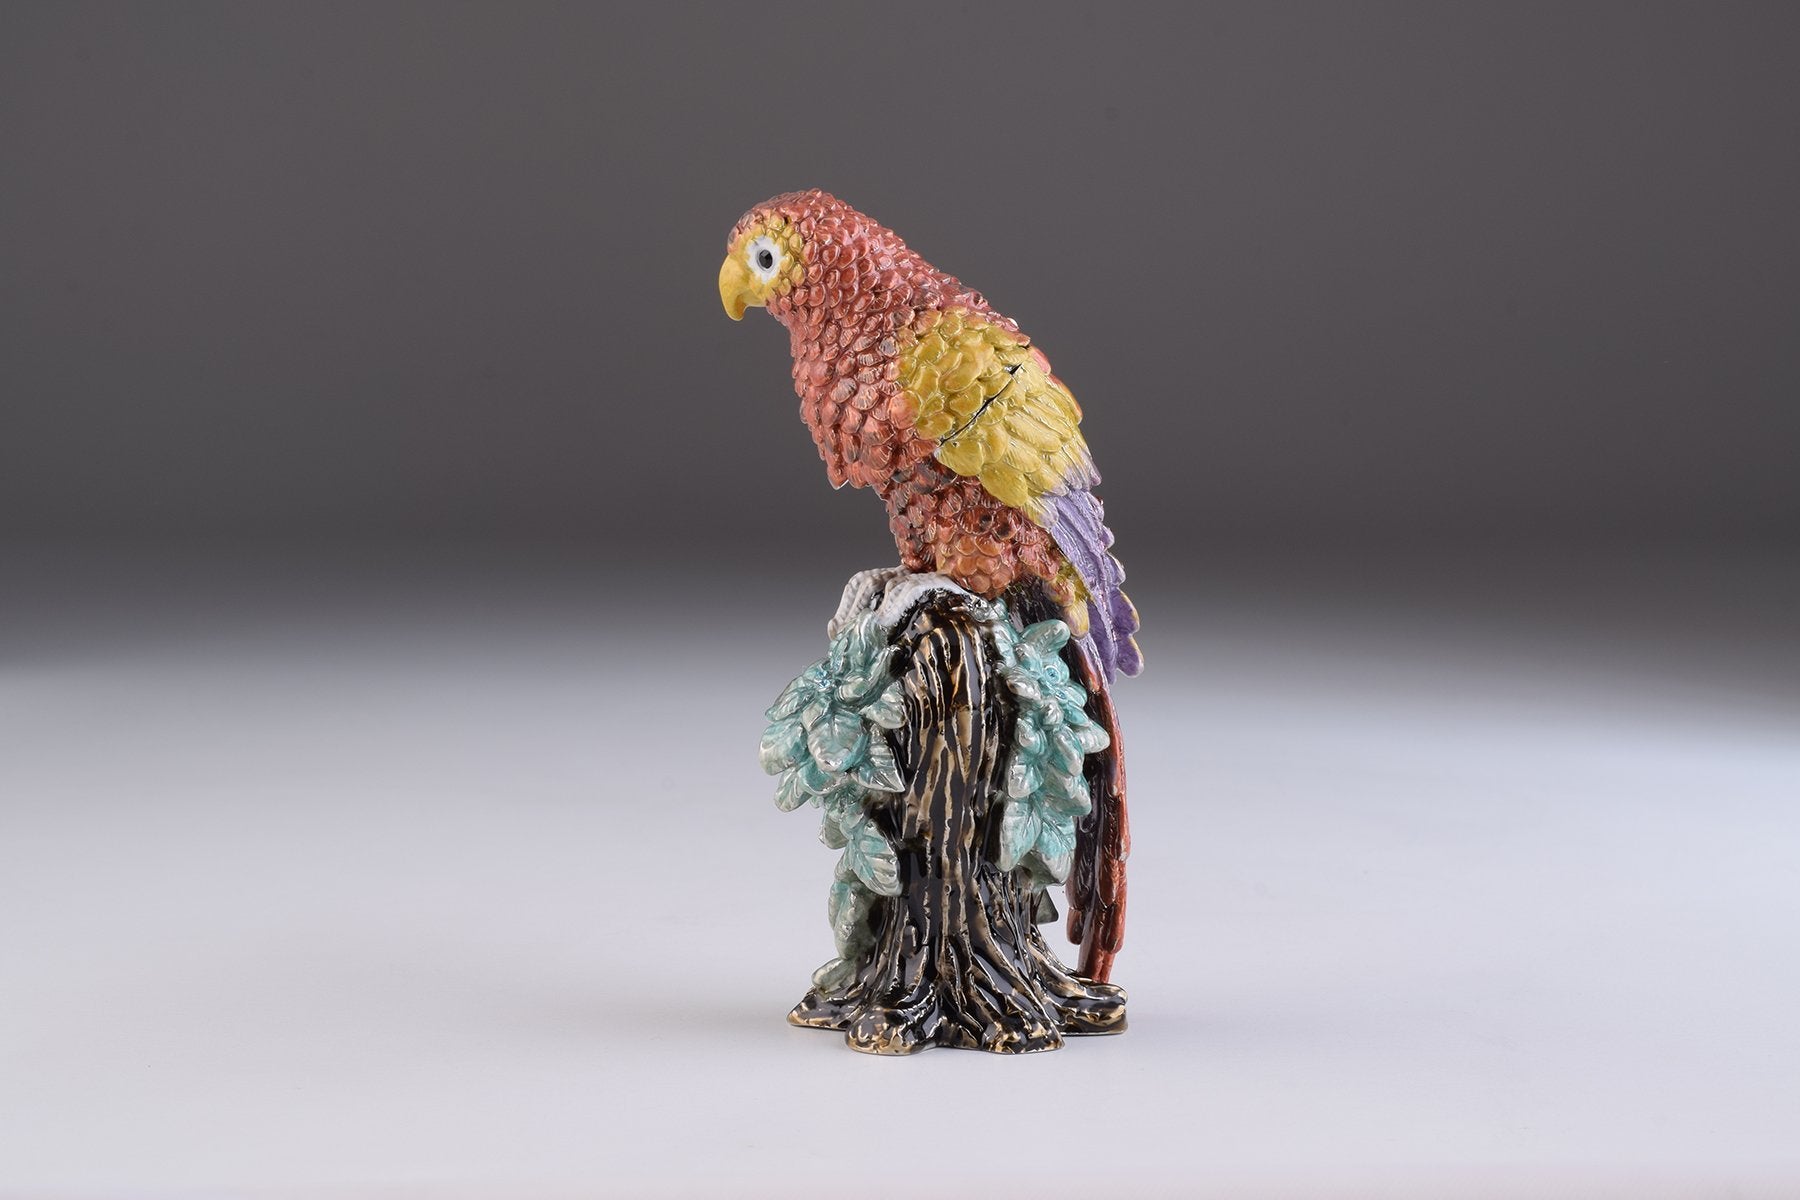 Keren Kopal Colorful Parrot  79.00